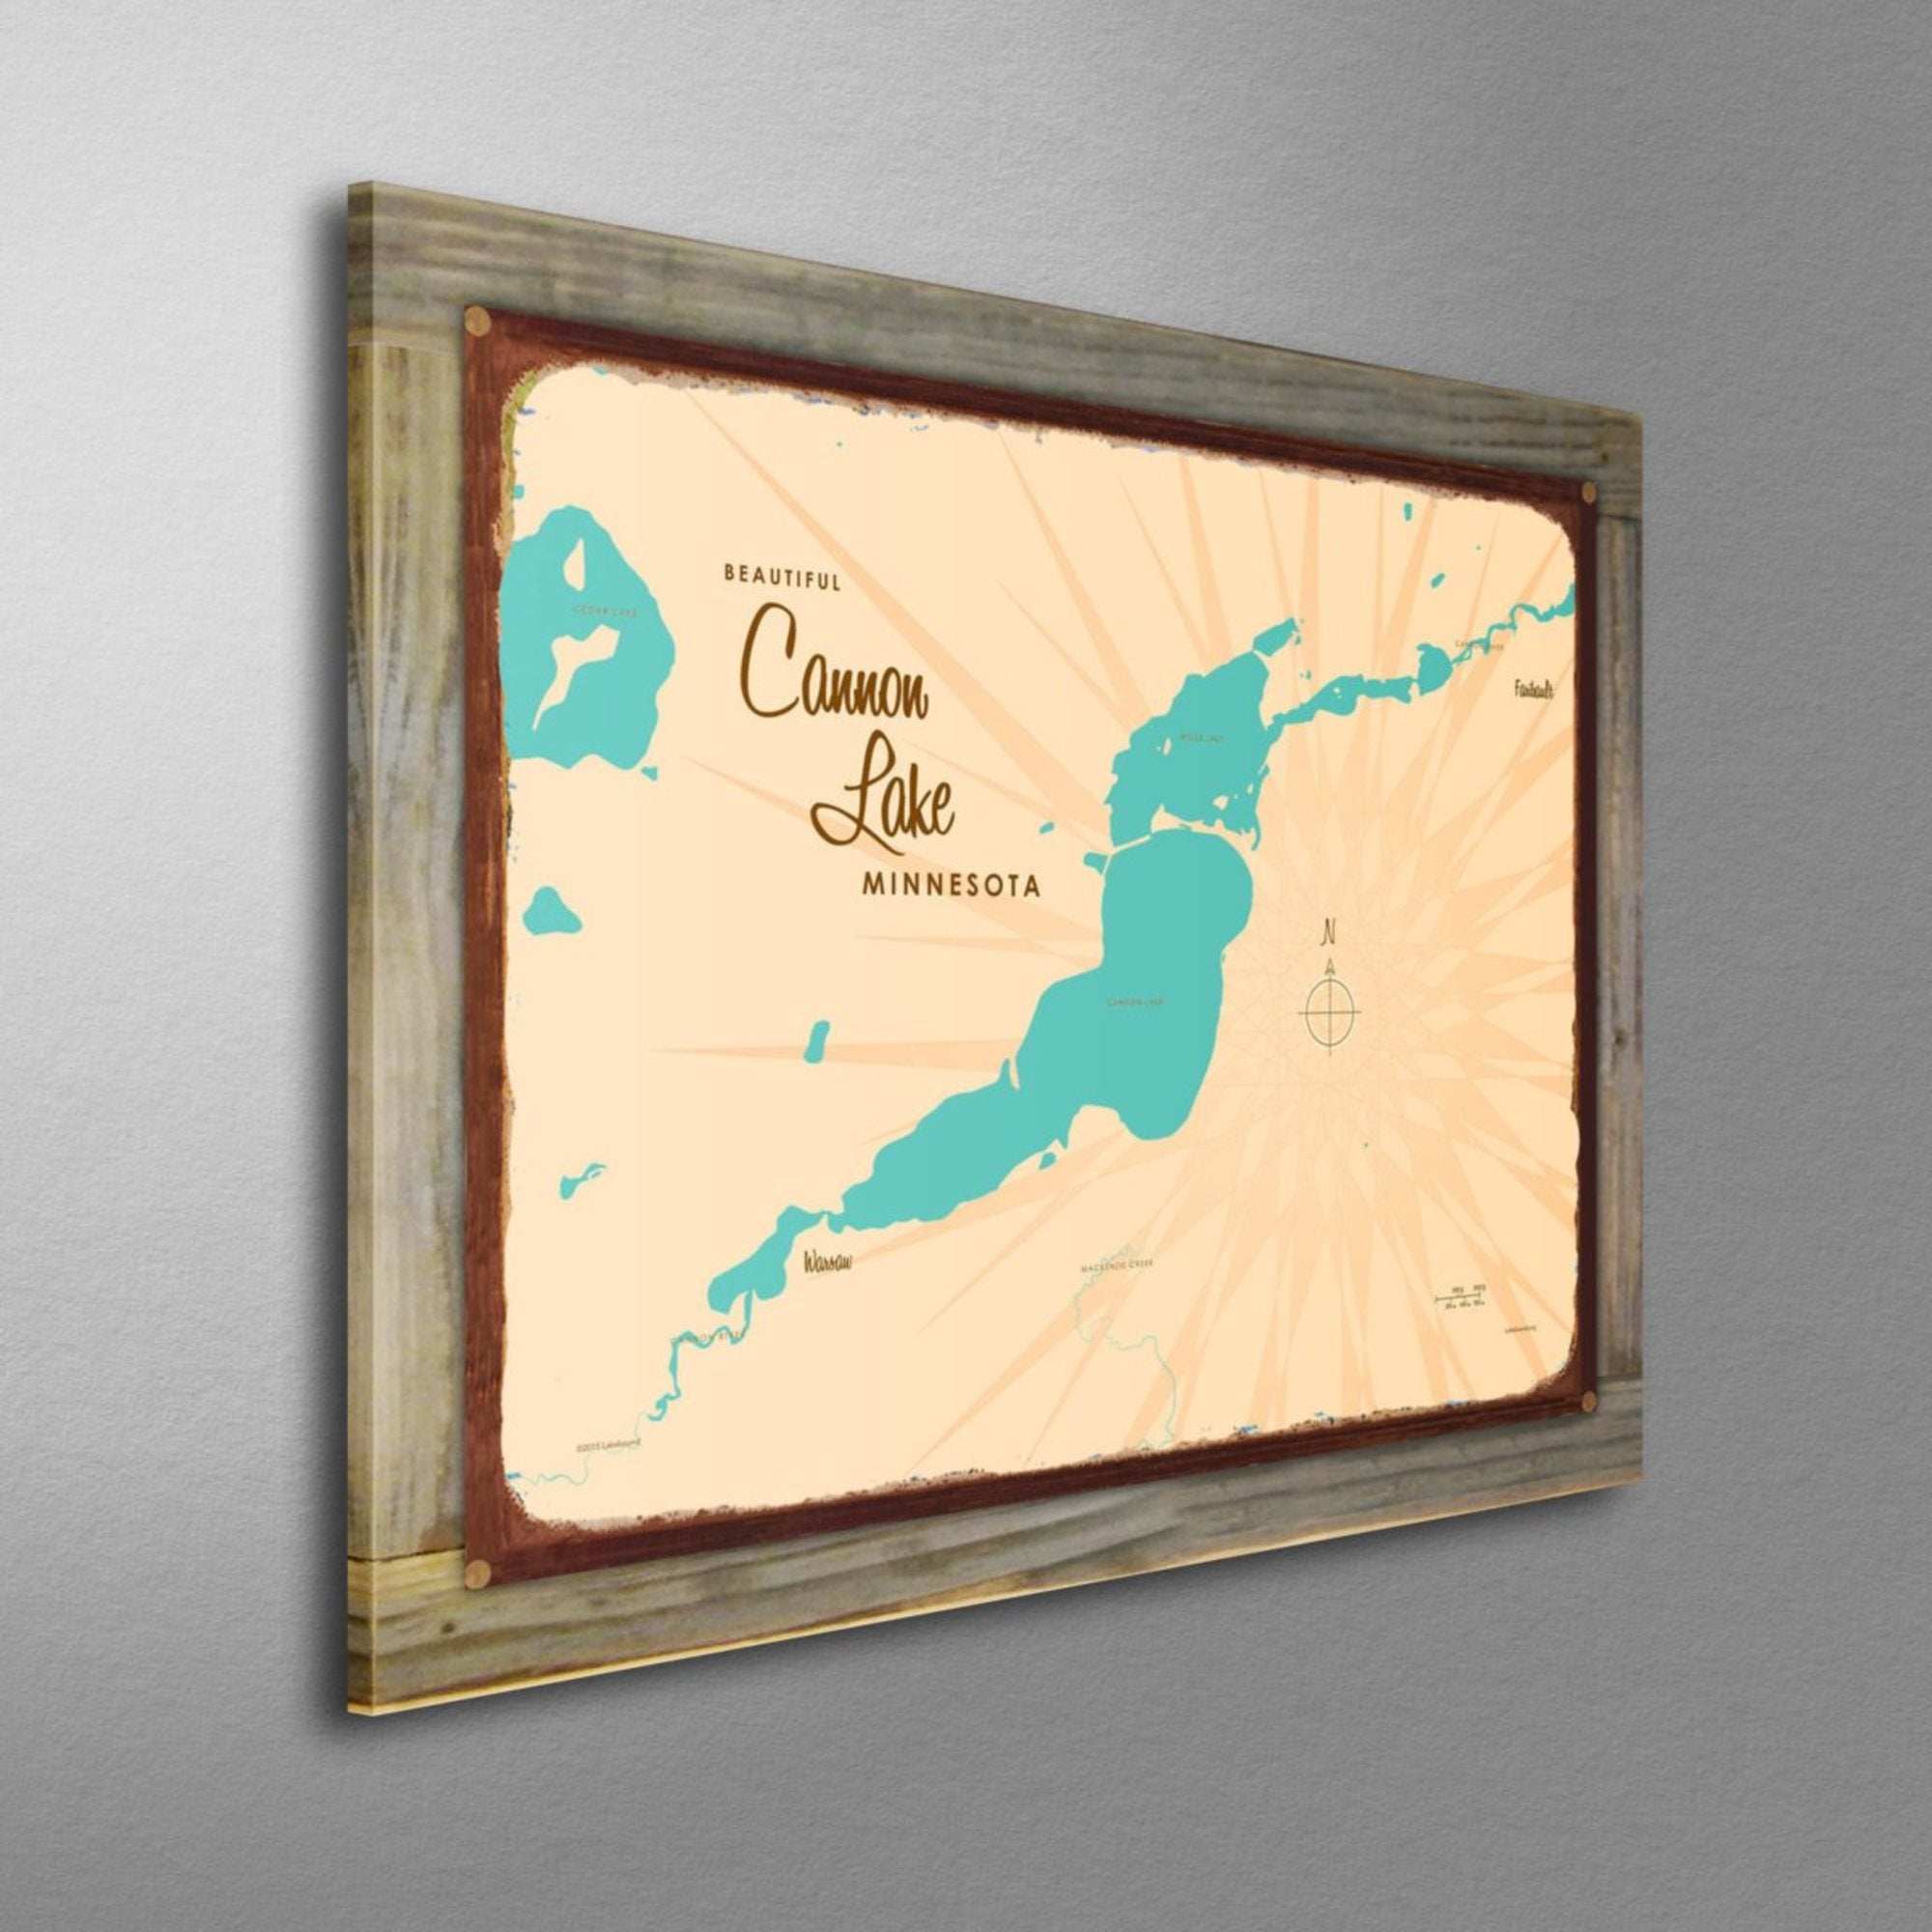 Cannon Lake Minnesota, Wood-Mounted Rustic Metal Sign Map Art